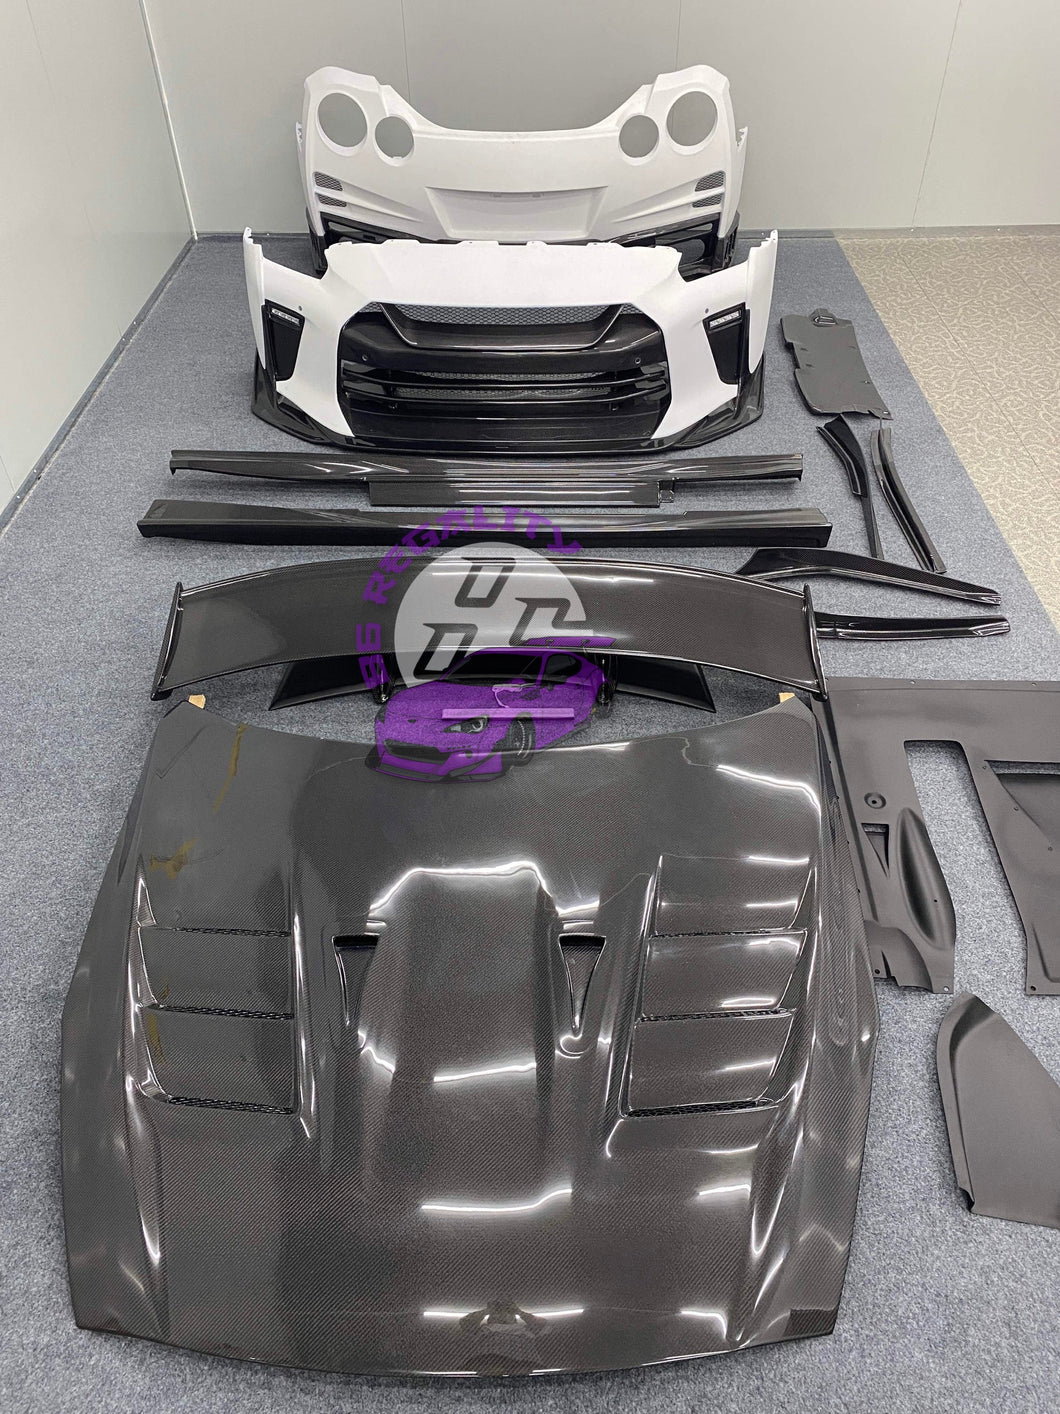 Nissan GTR Complete bodykit Top secret